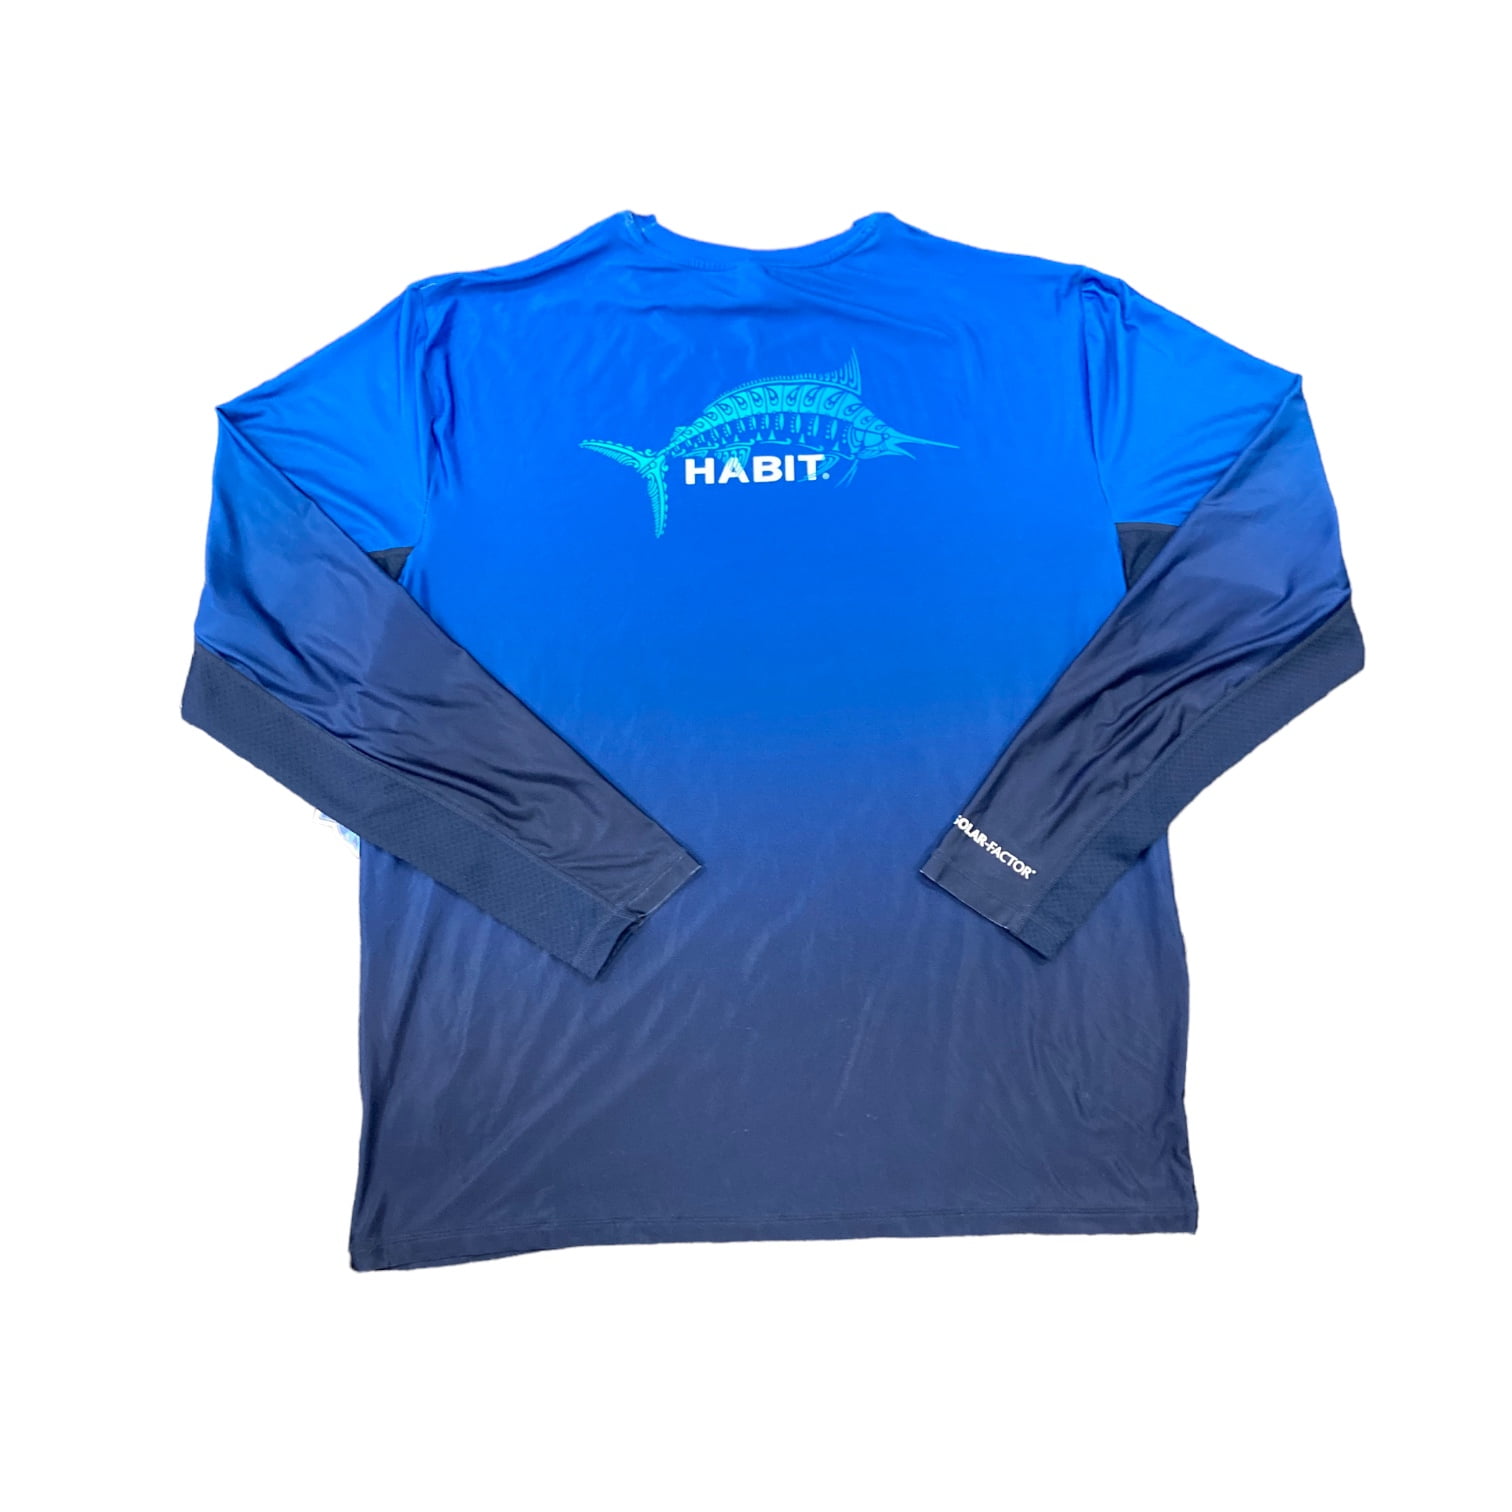 Habit Men's Mariana Inlet Long Sleeve Performance Shirt (Habit